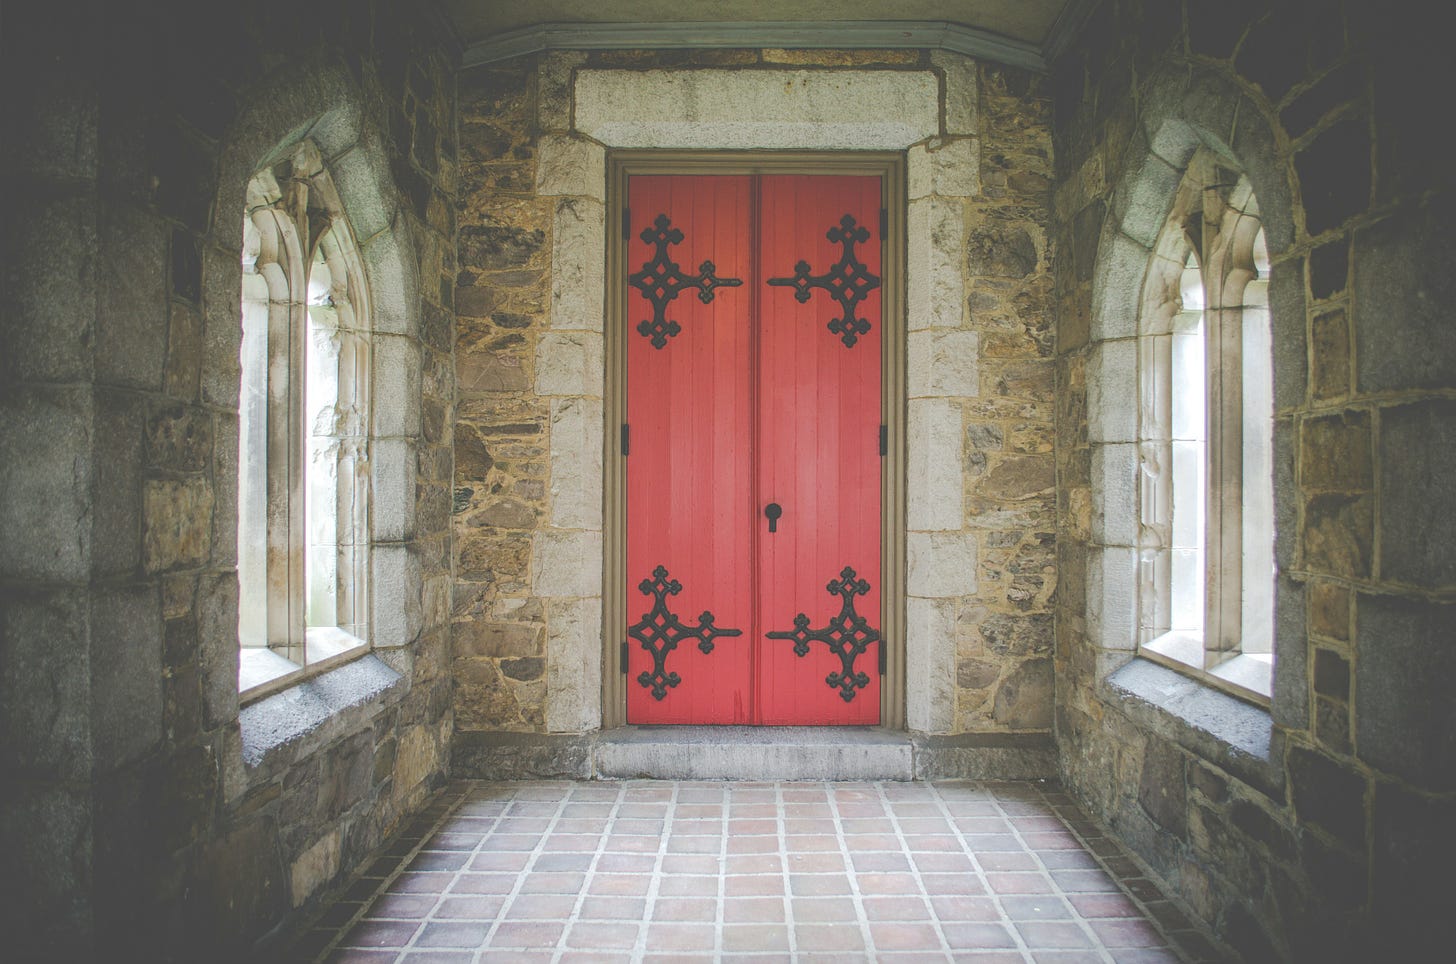 Red door in a stone church hallway